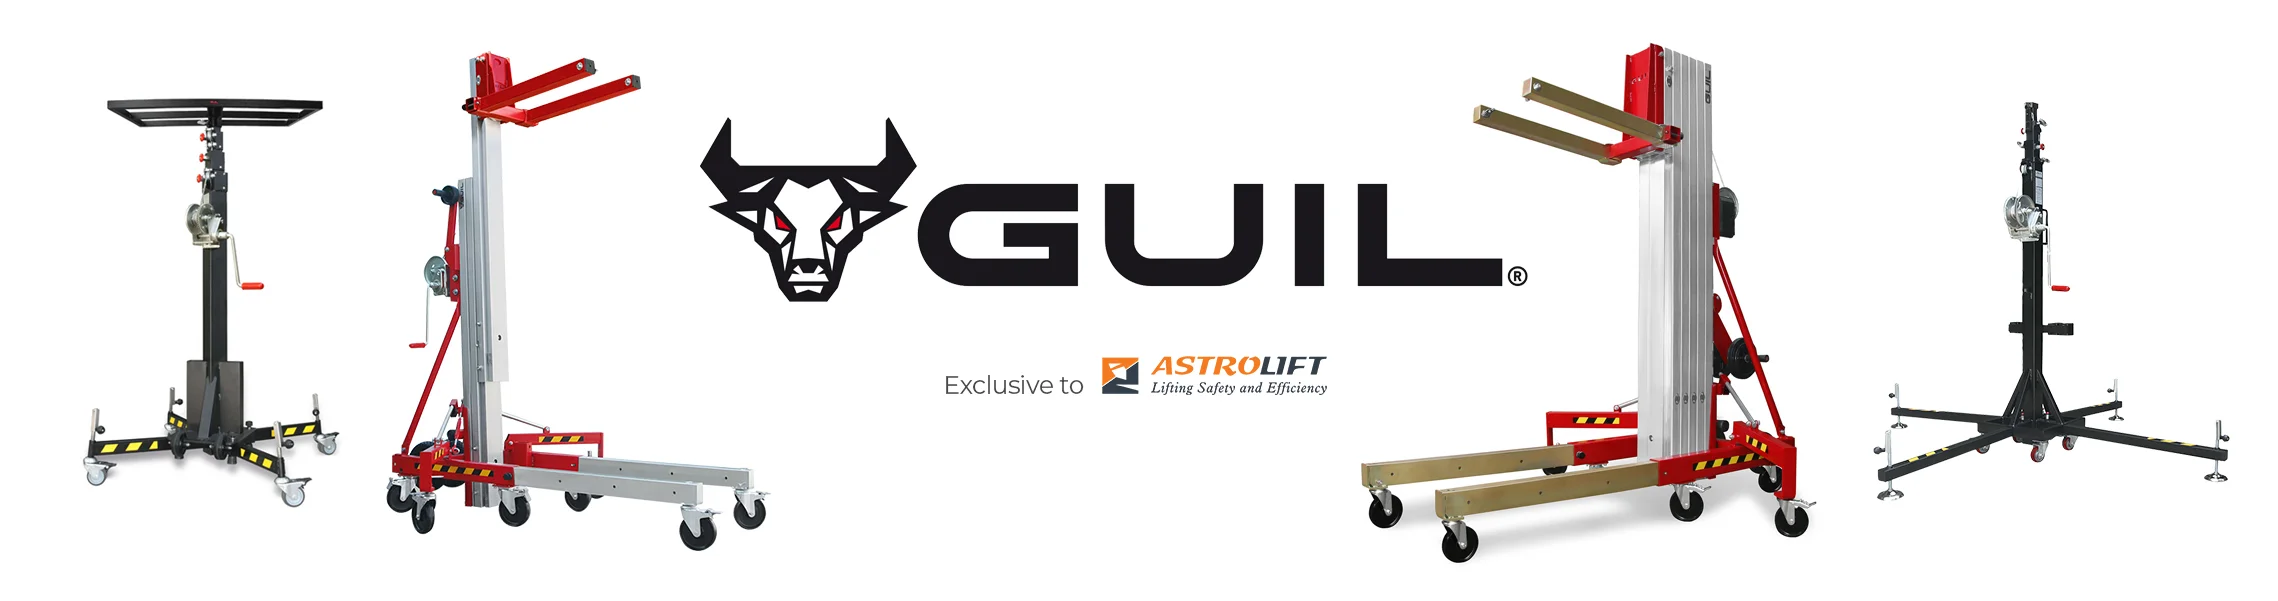 GUIL Material Lifting Equipment logo